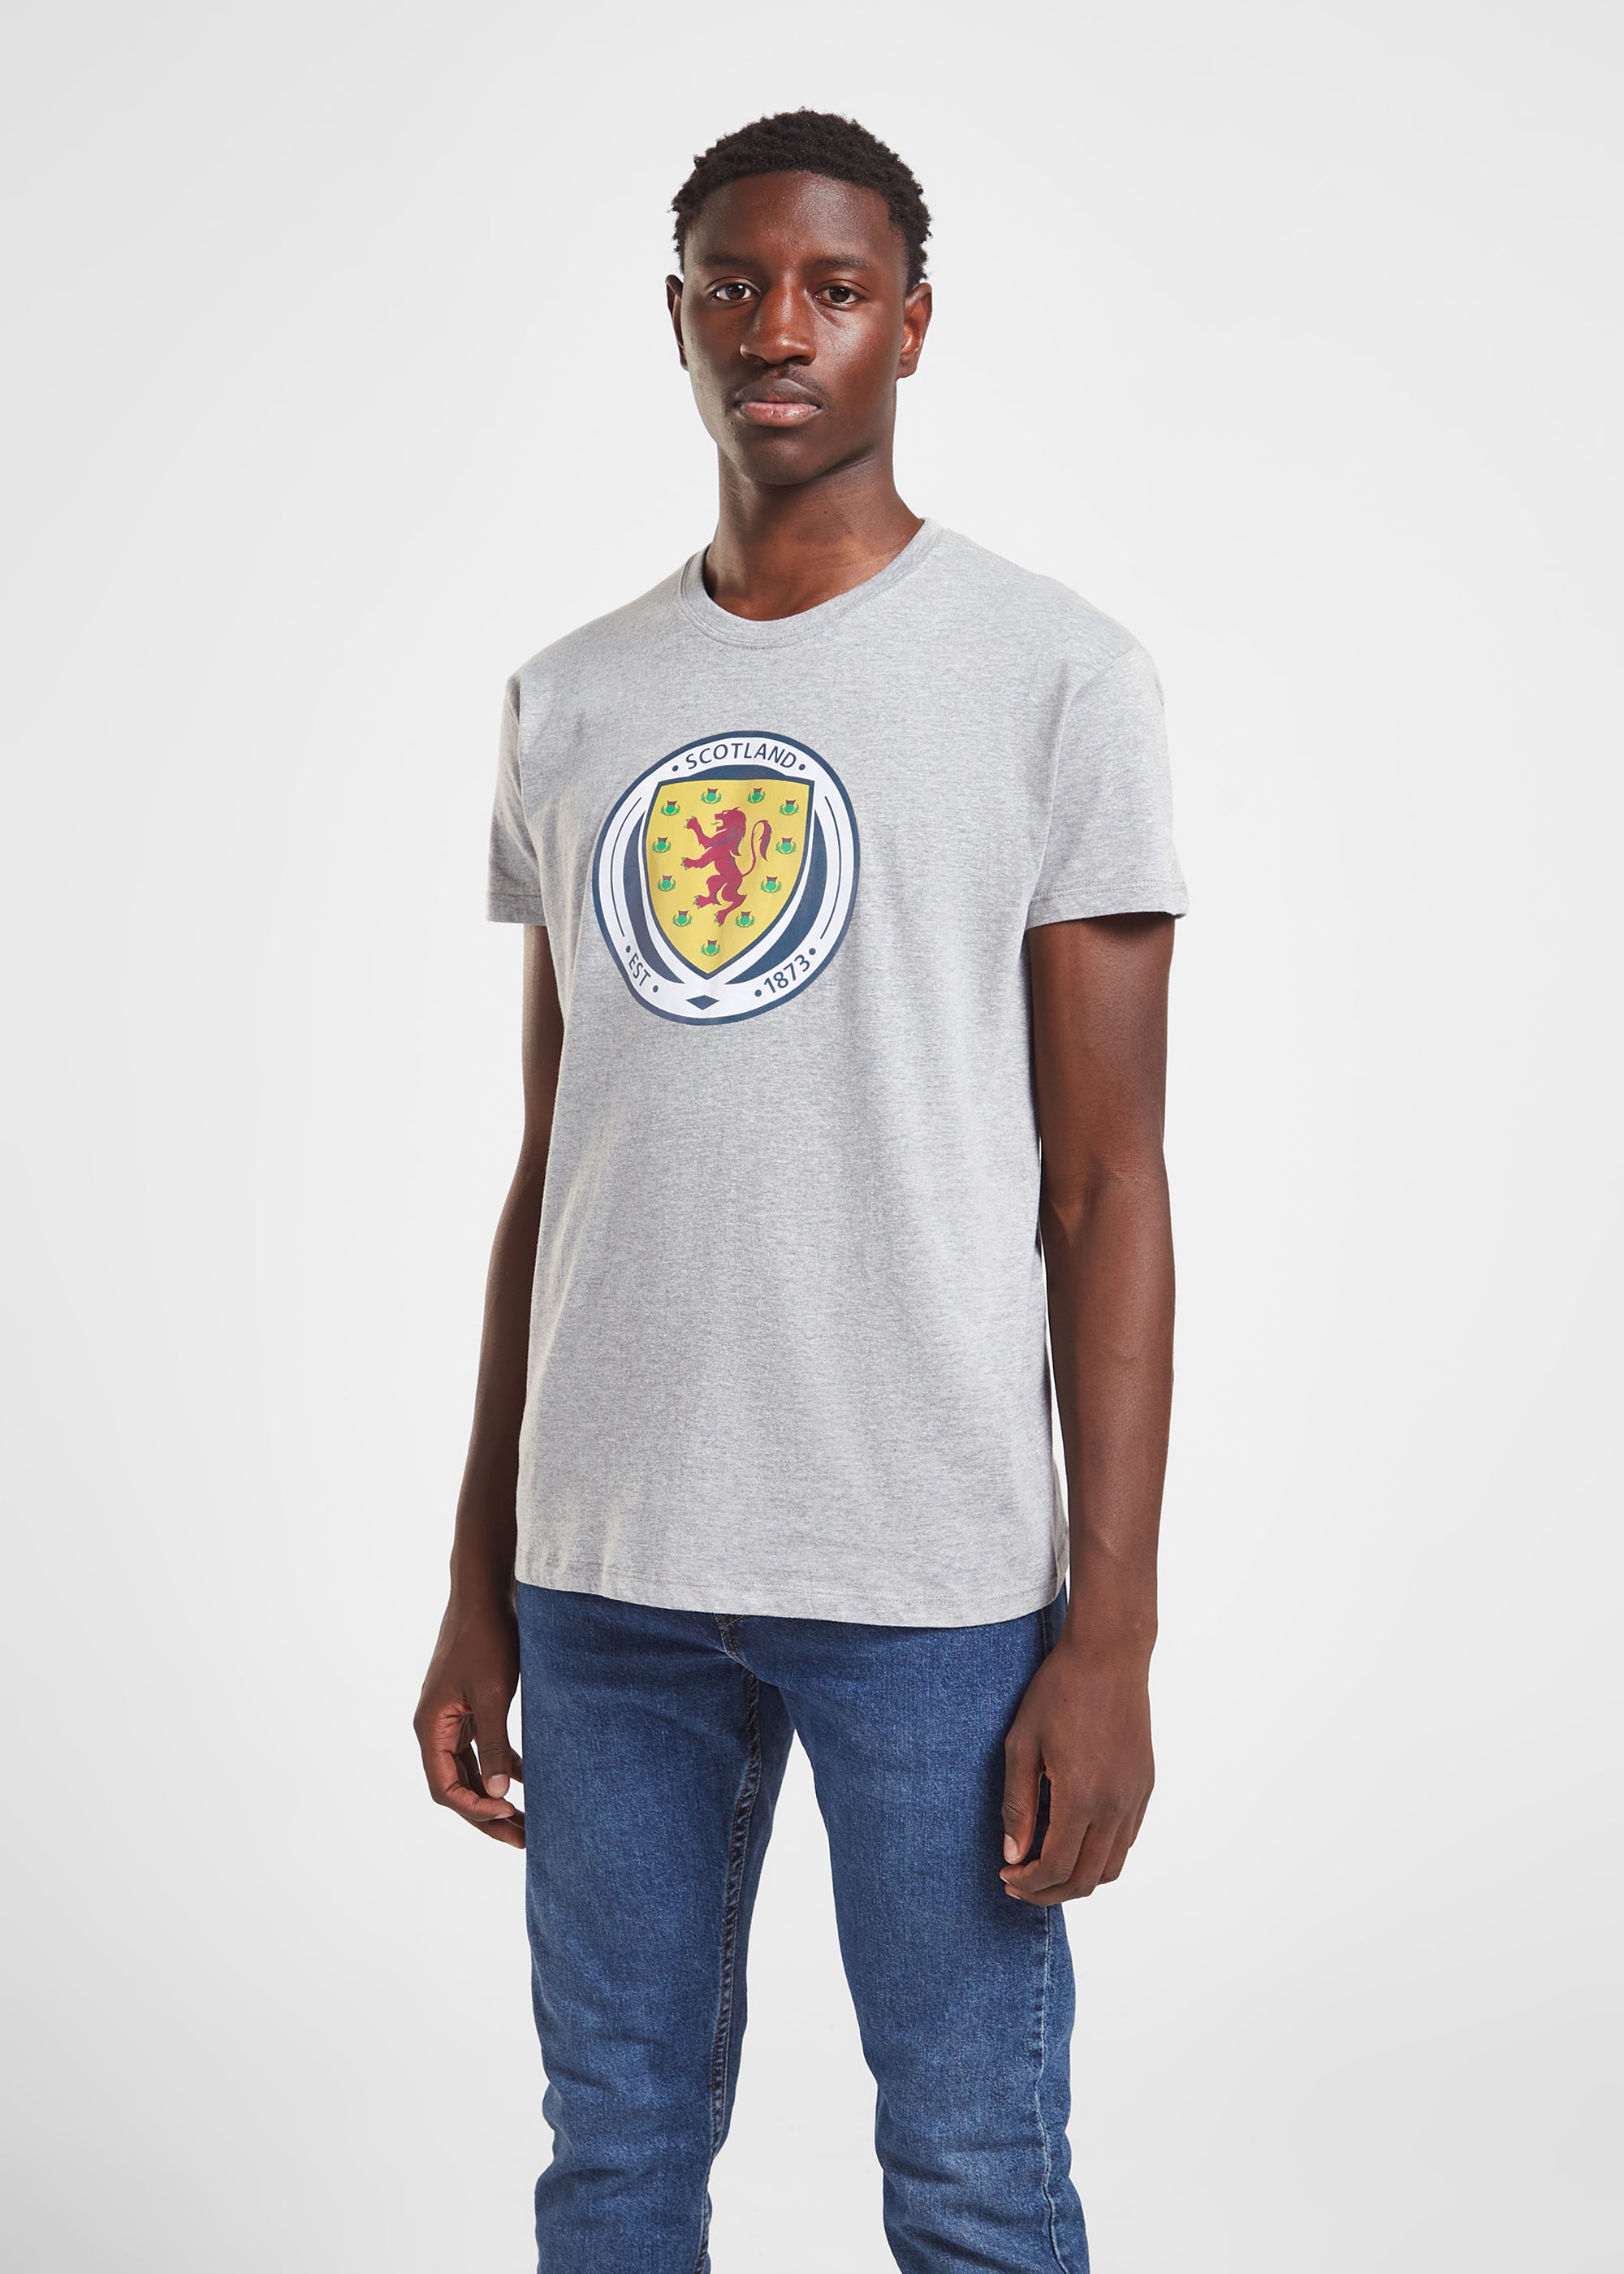 Official Team Scotland FA logo T-Shirt - Grey - The World Football Store